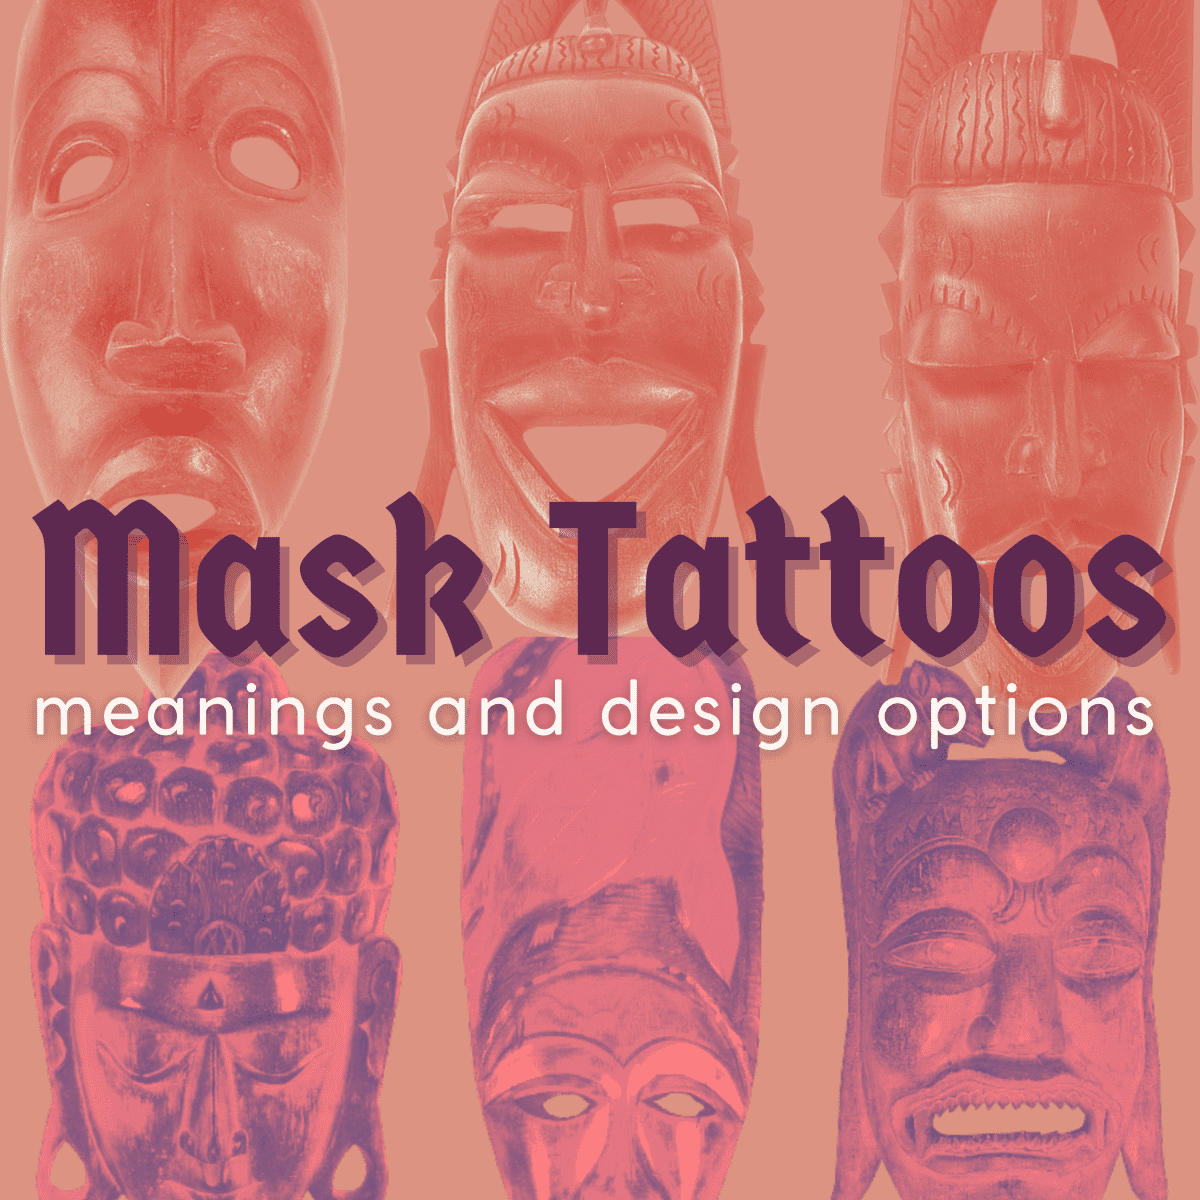 Dark Art Japanese Devil Oni Mask Tattoo Hand Drawn Engraving Stock Vector  by ©Morspective 593678516